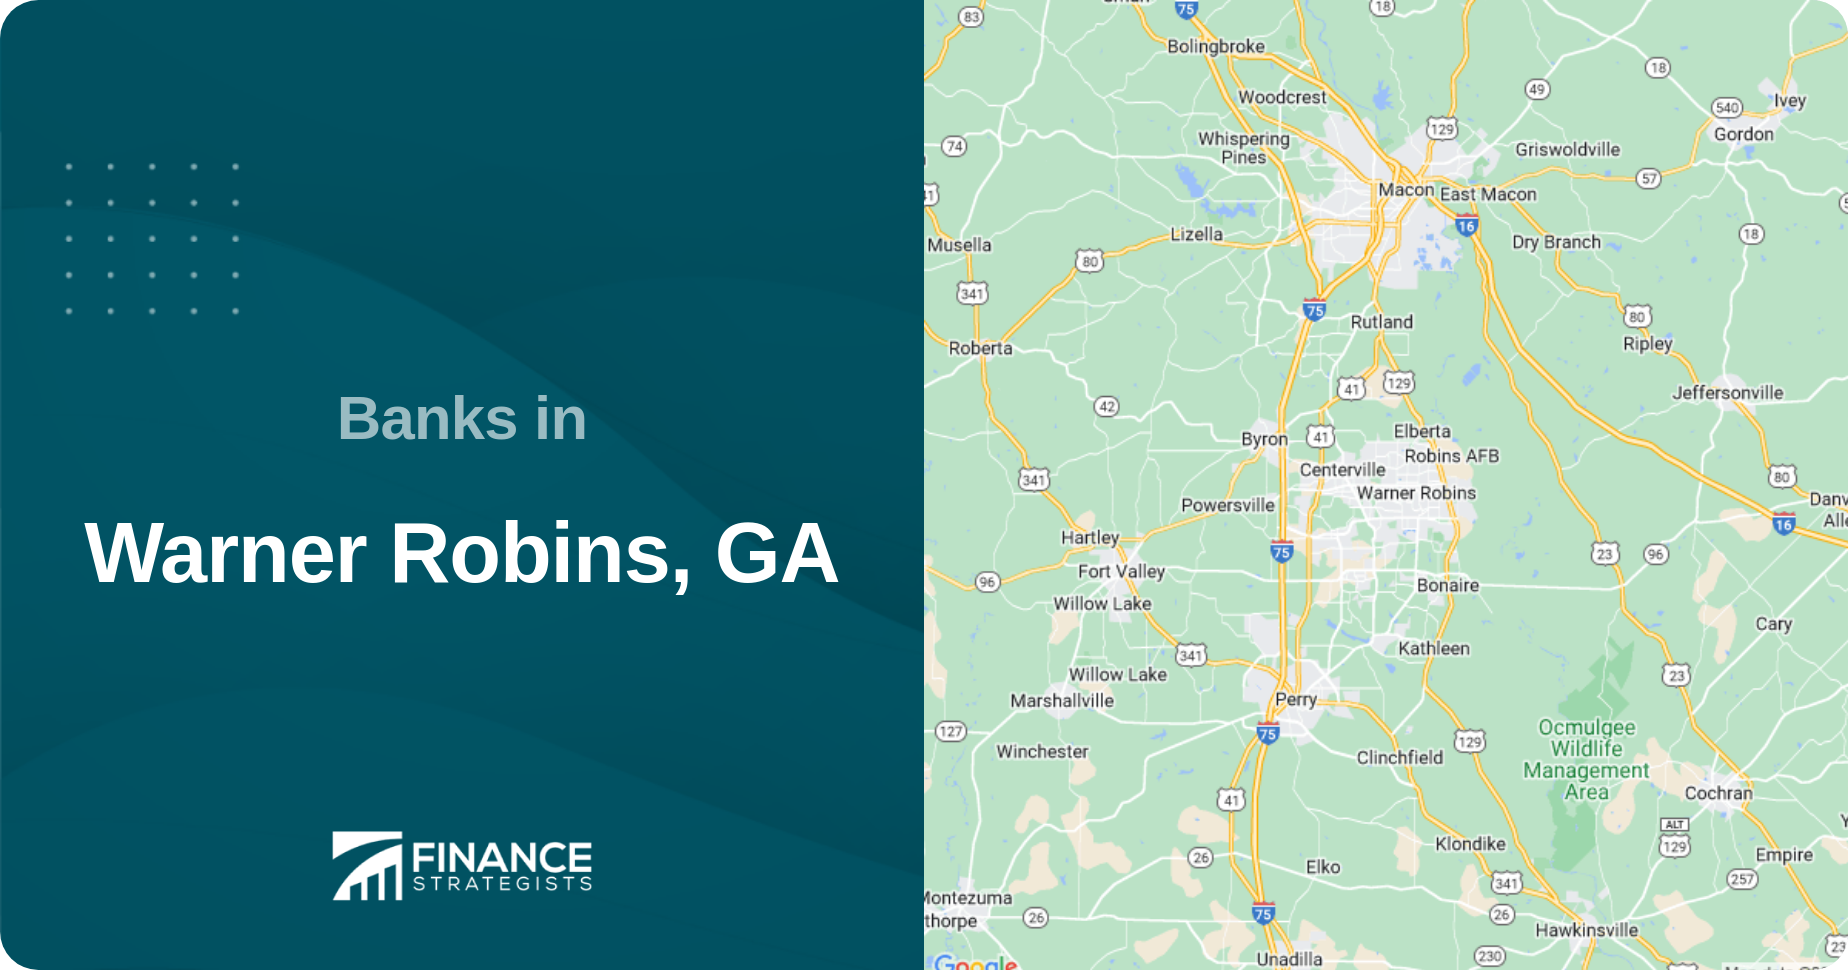 Banks in Warner Robins, GA